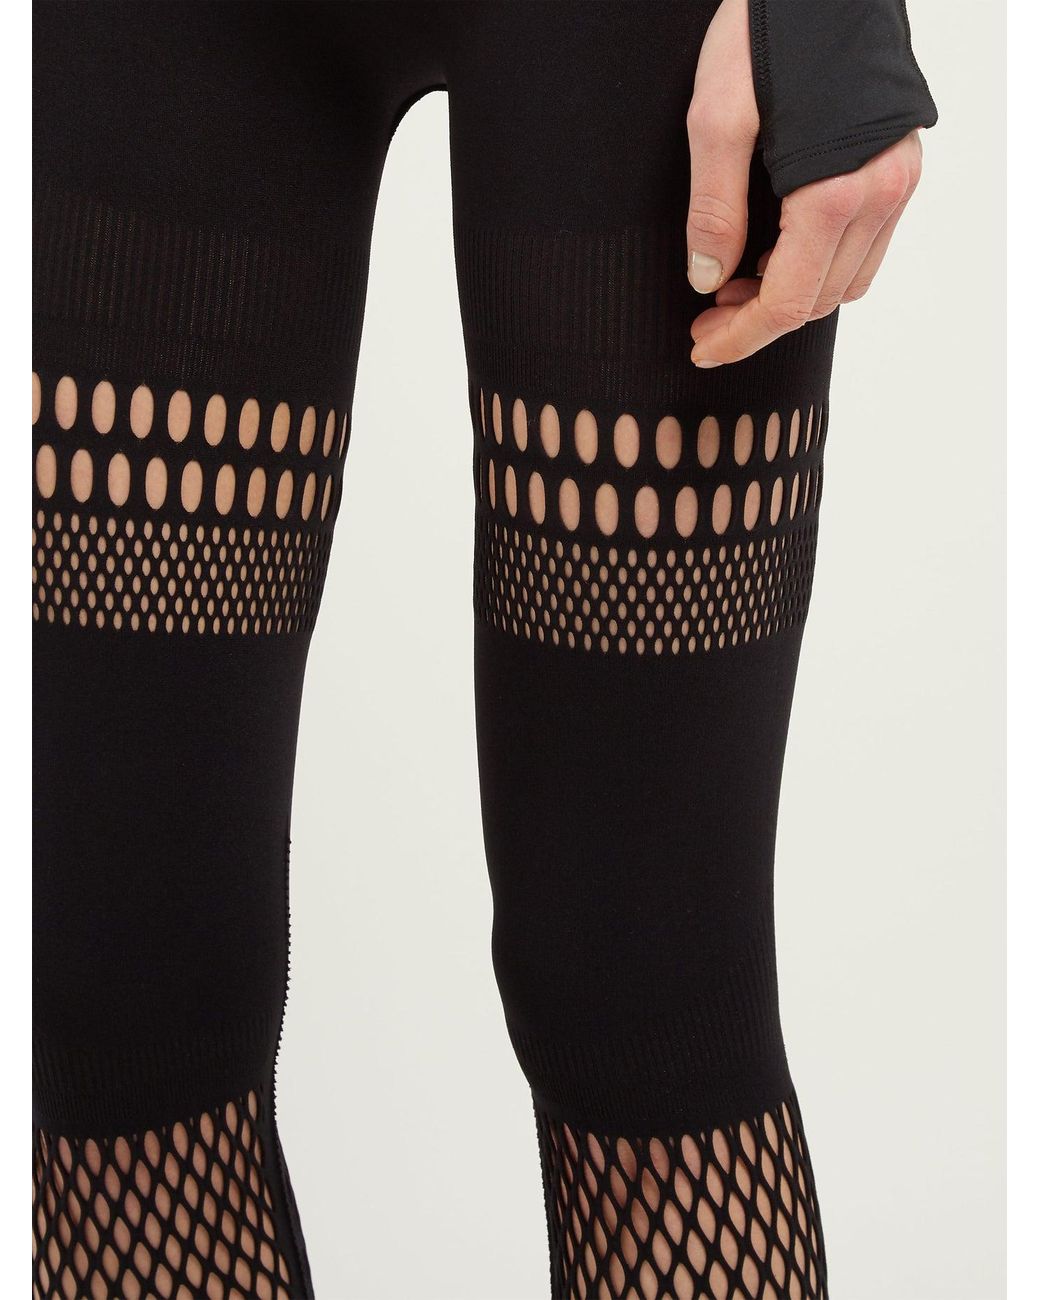 adidas By Stella McCartney Warp Knit Laser-cut Leggings in Black | Lyst